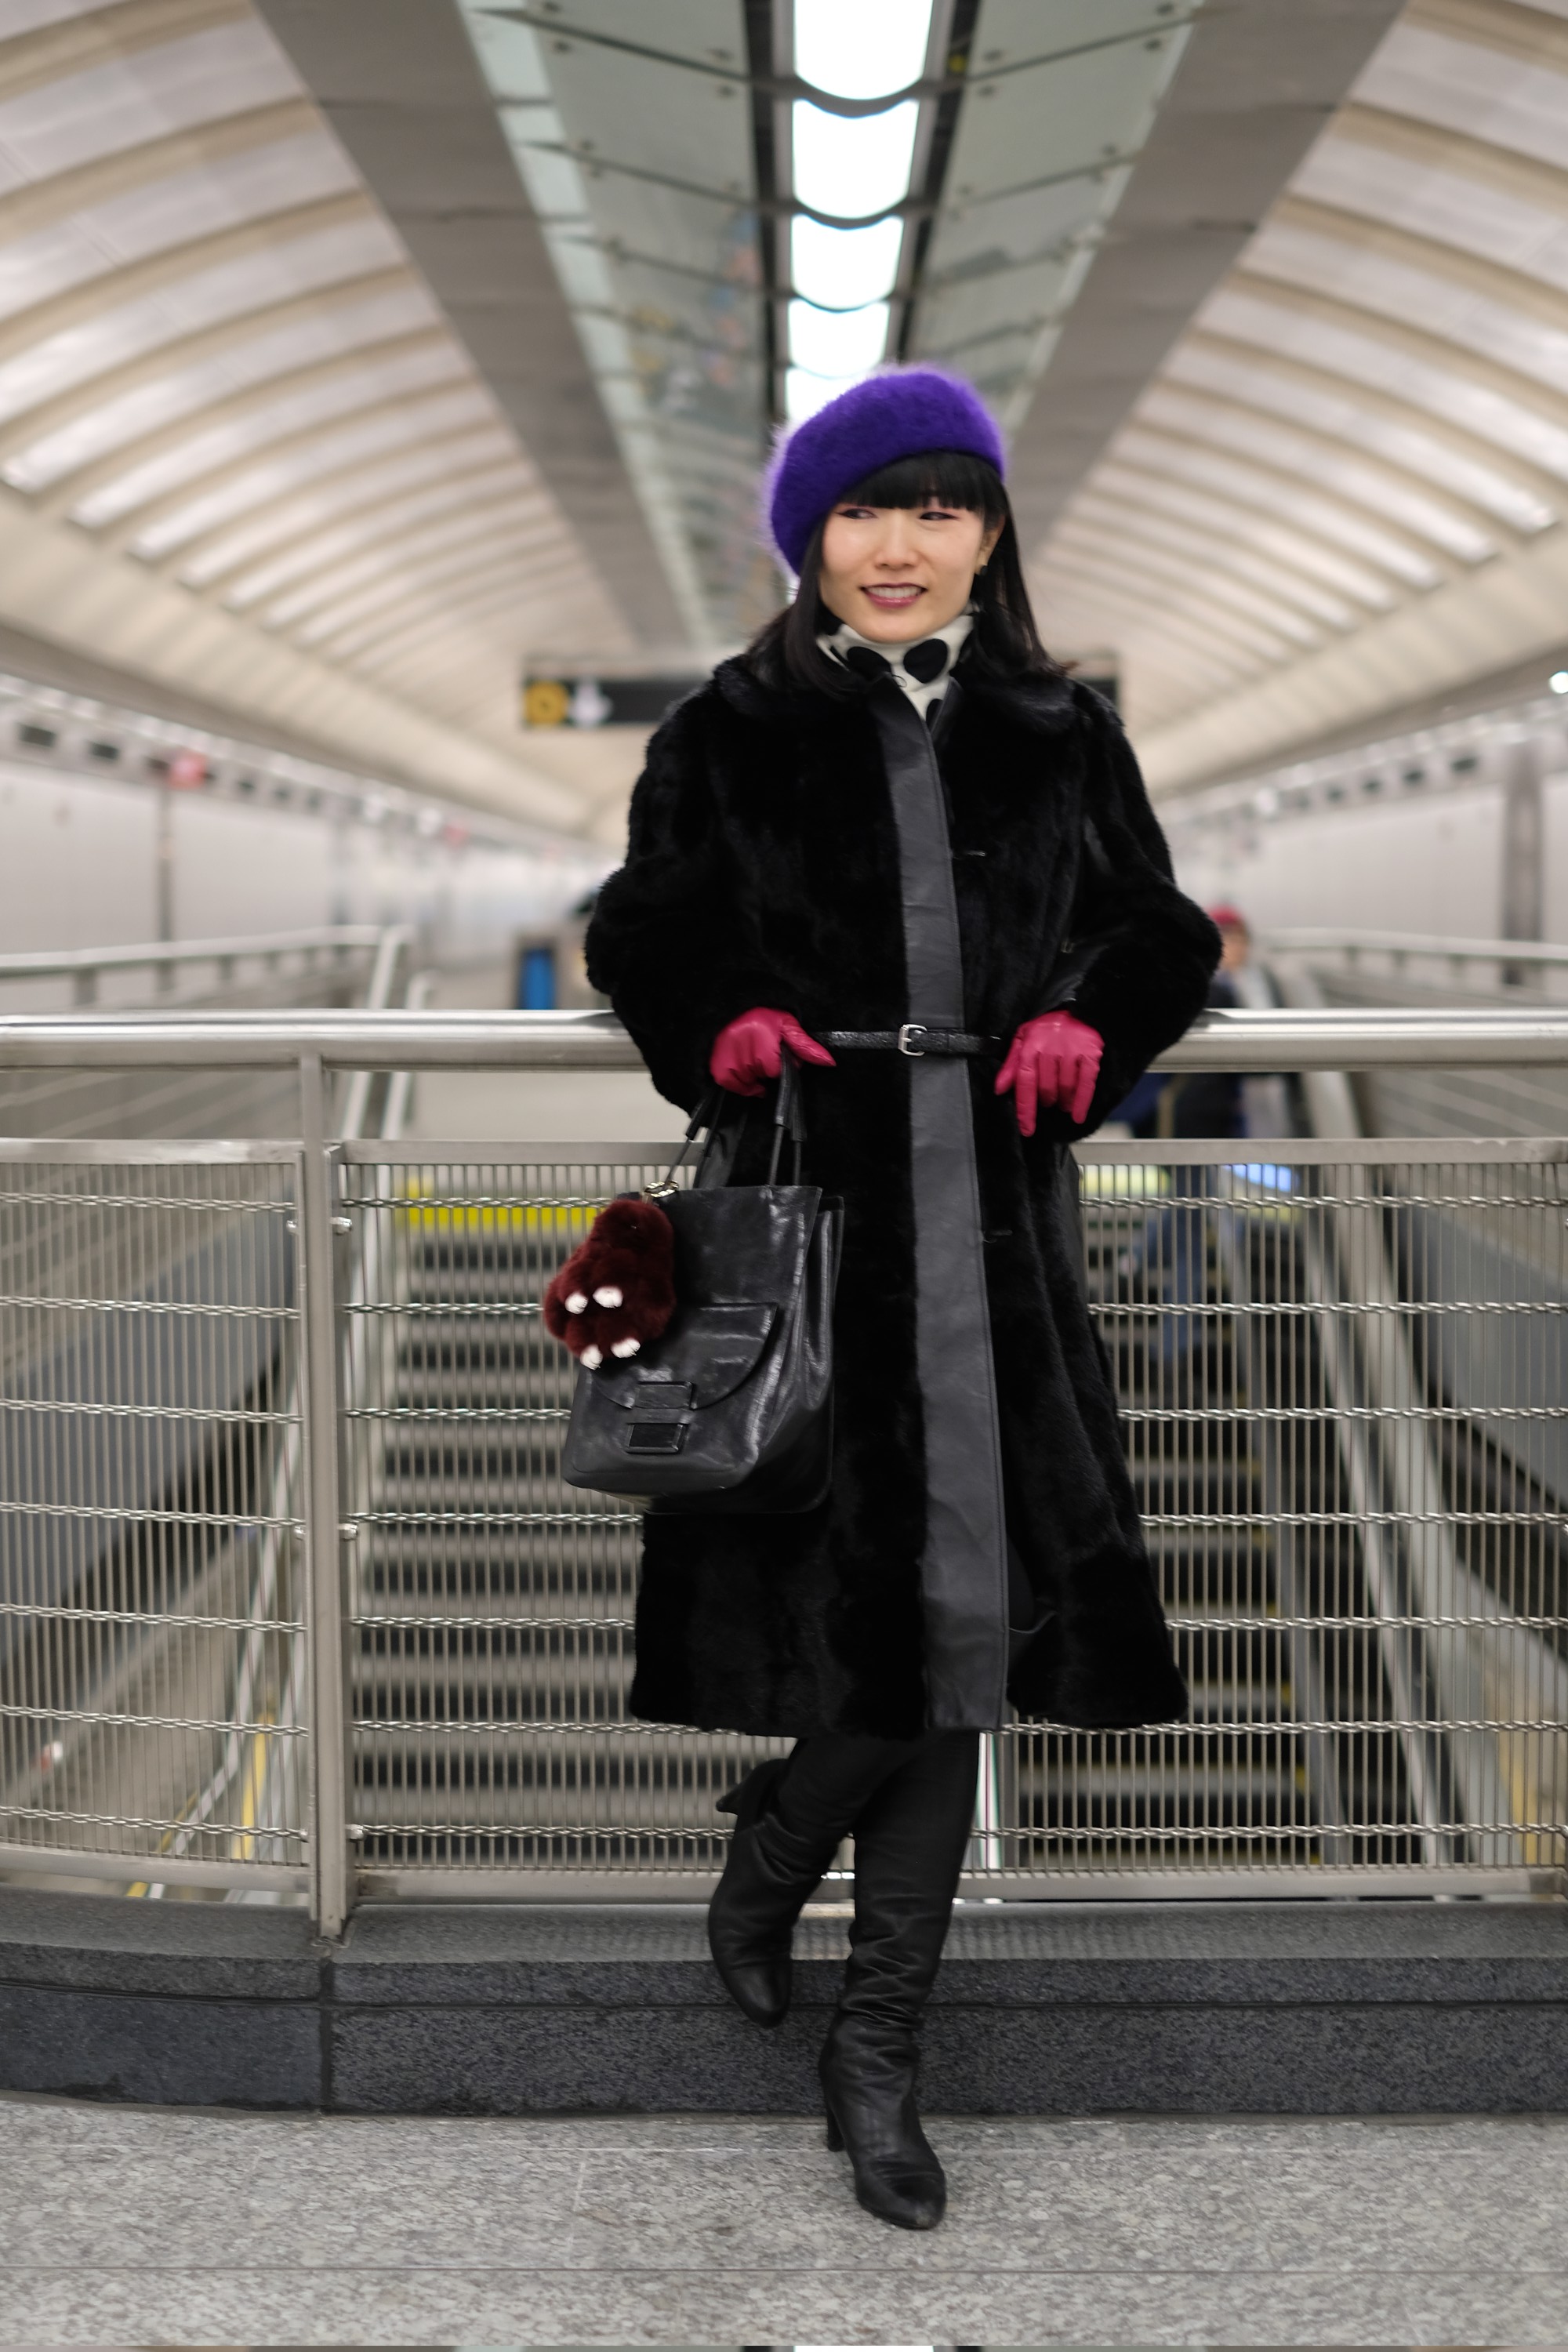 fashion model in subway station